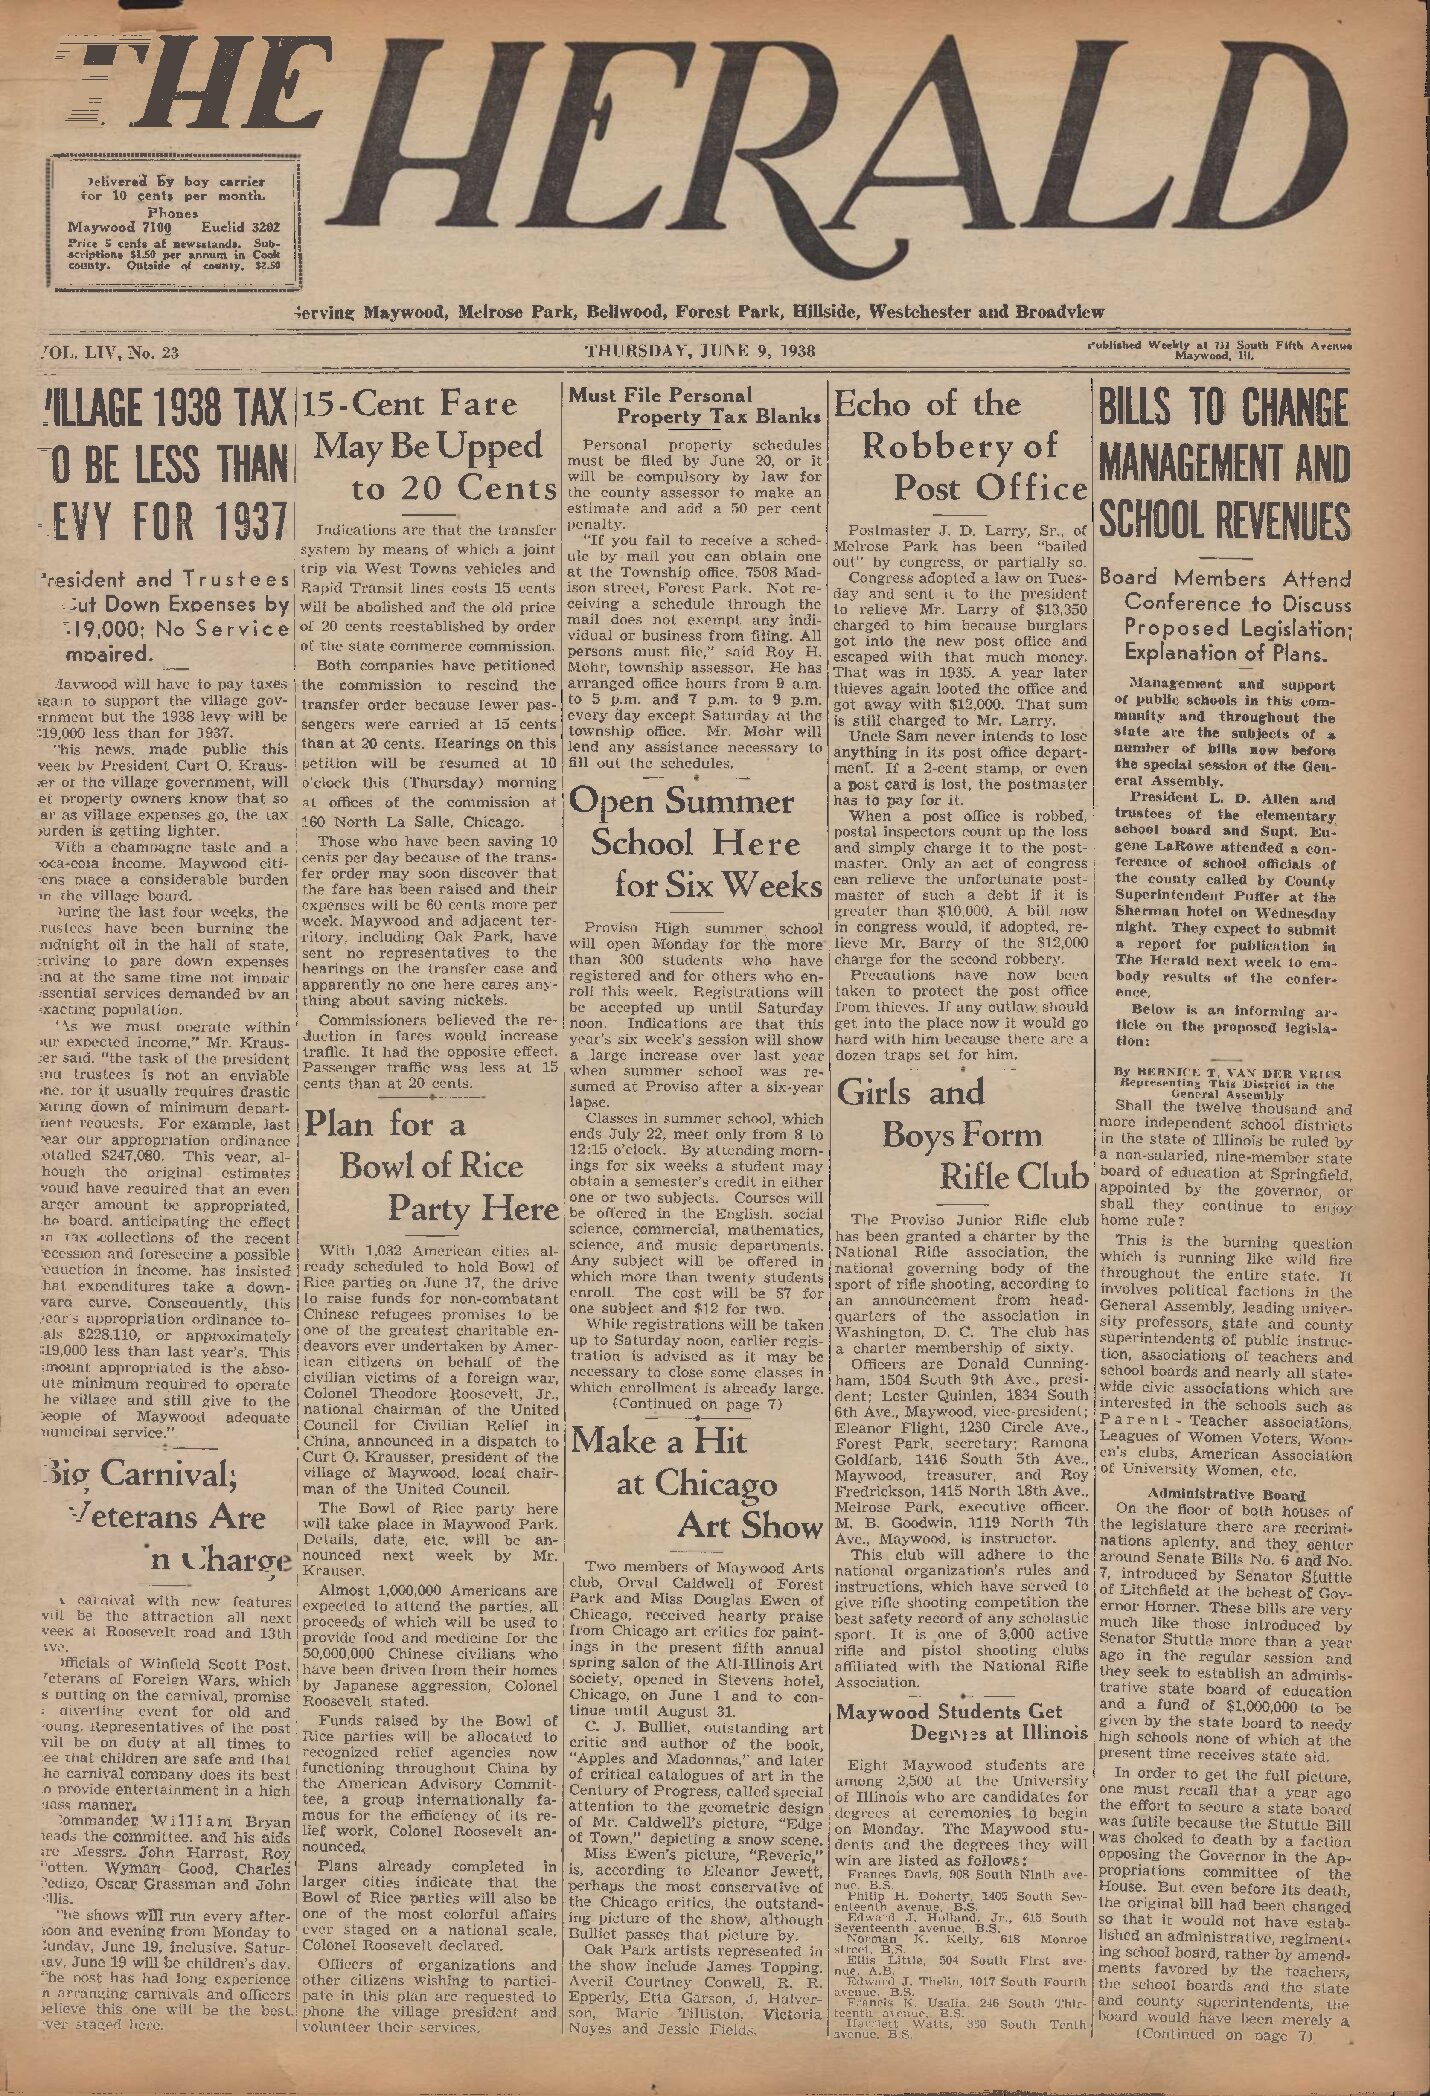 The Herald – 19380609